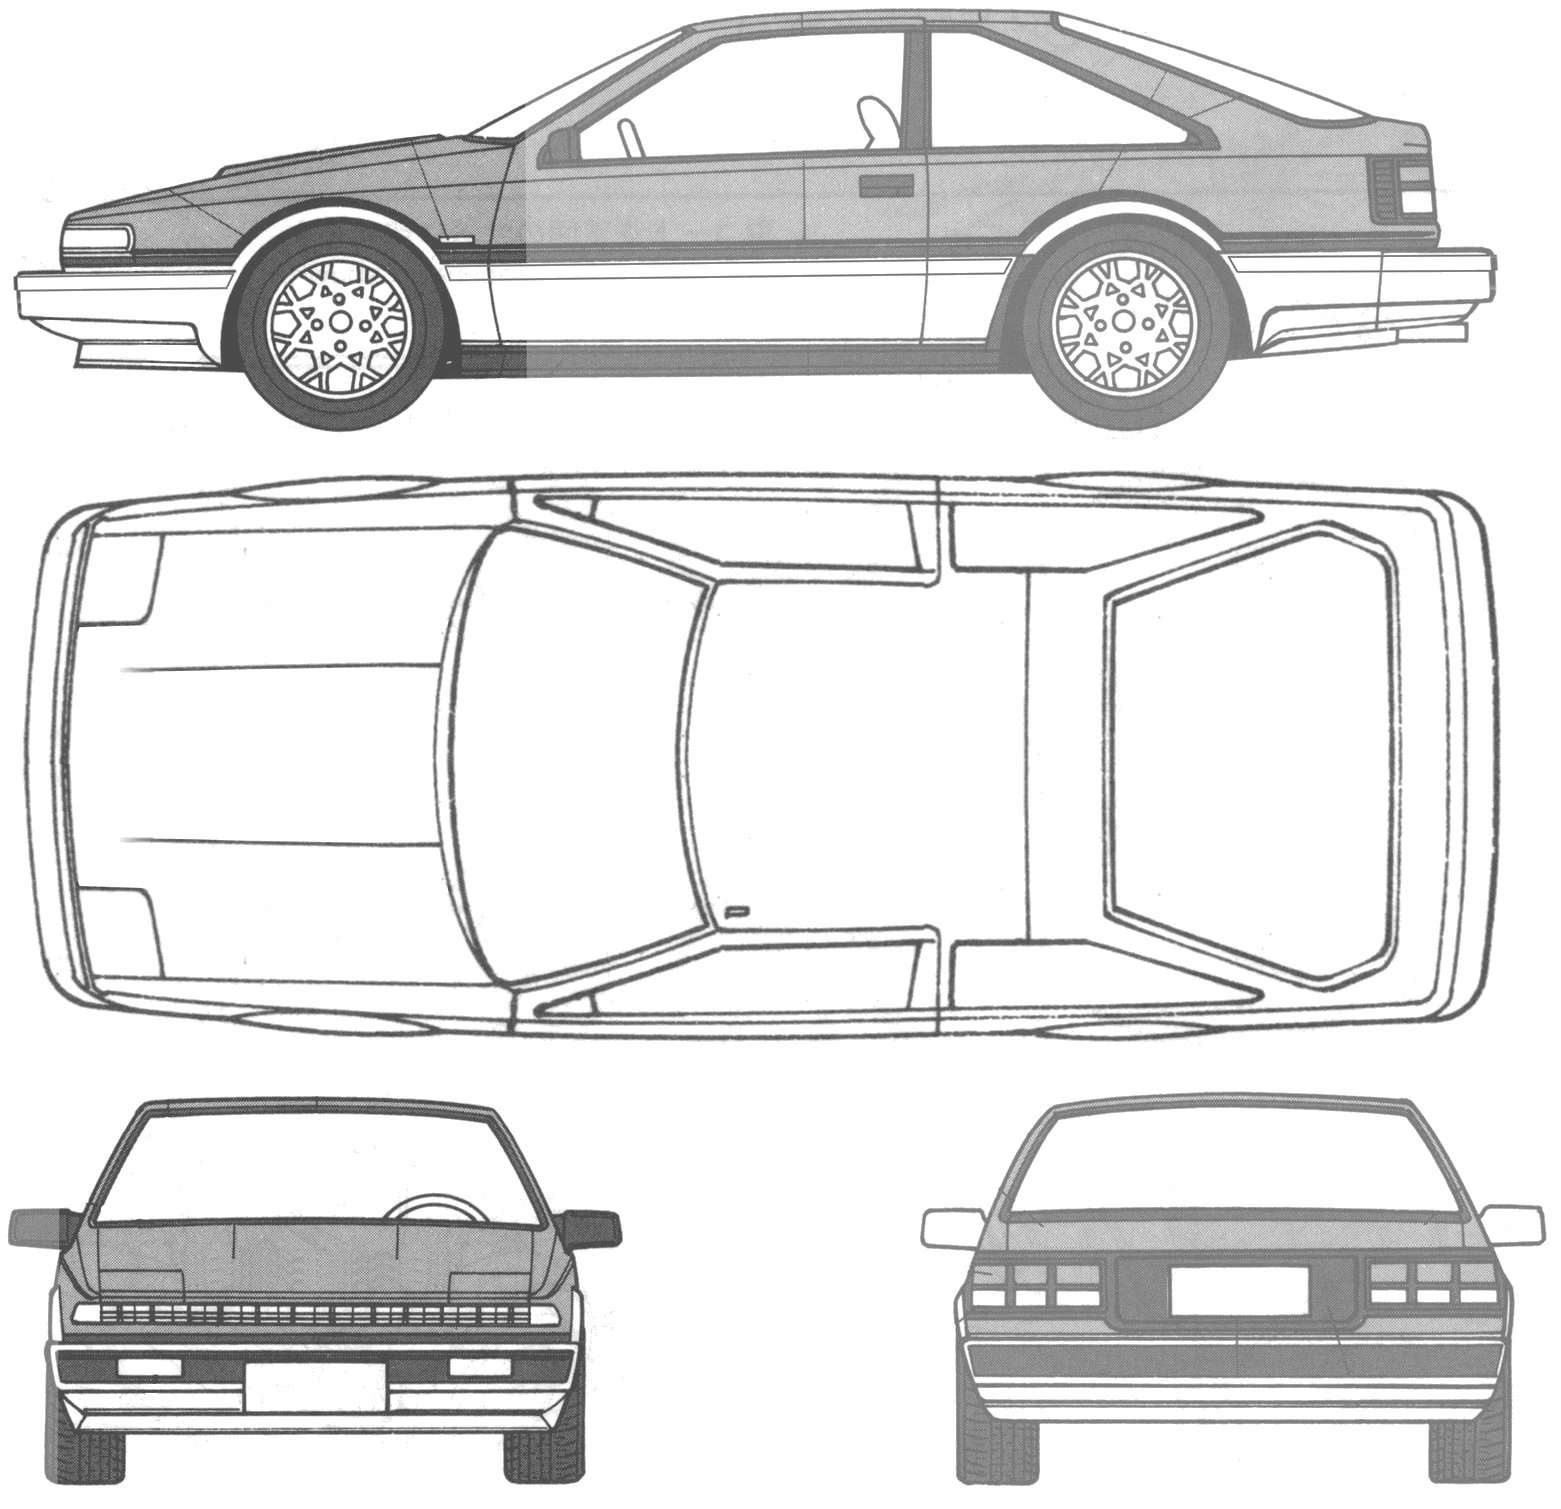 Nissan silvia s12 blueprints #3